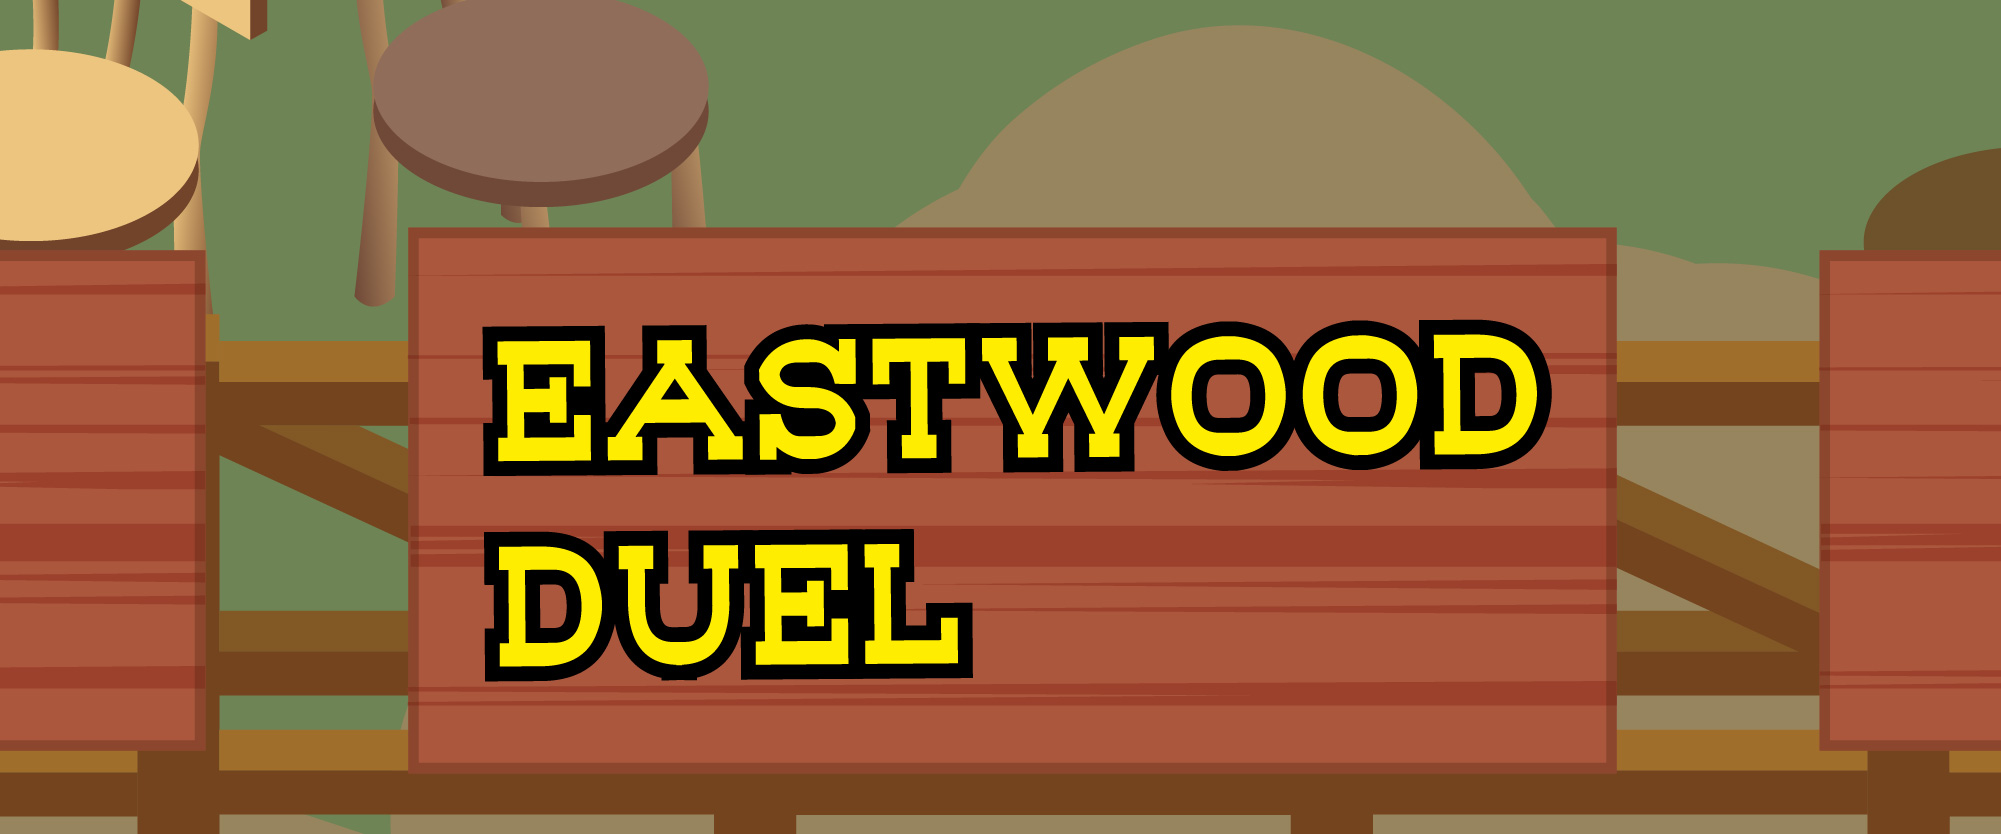 Eastwood Duel